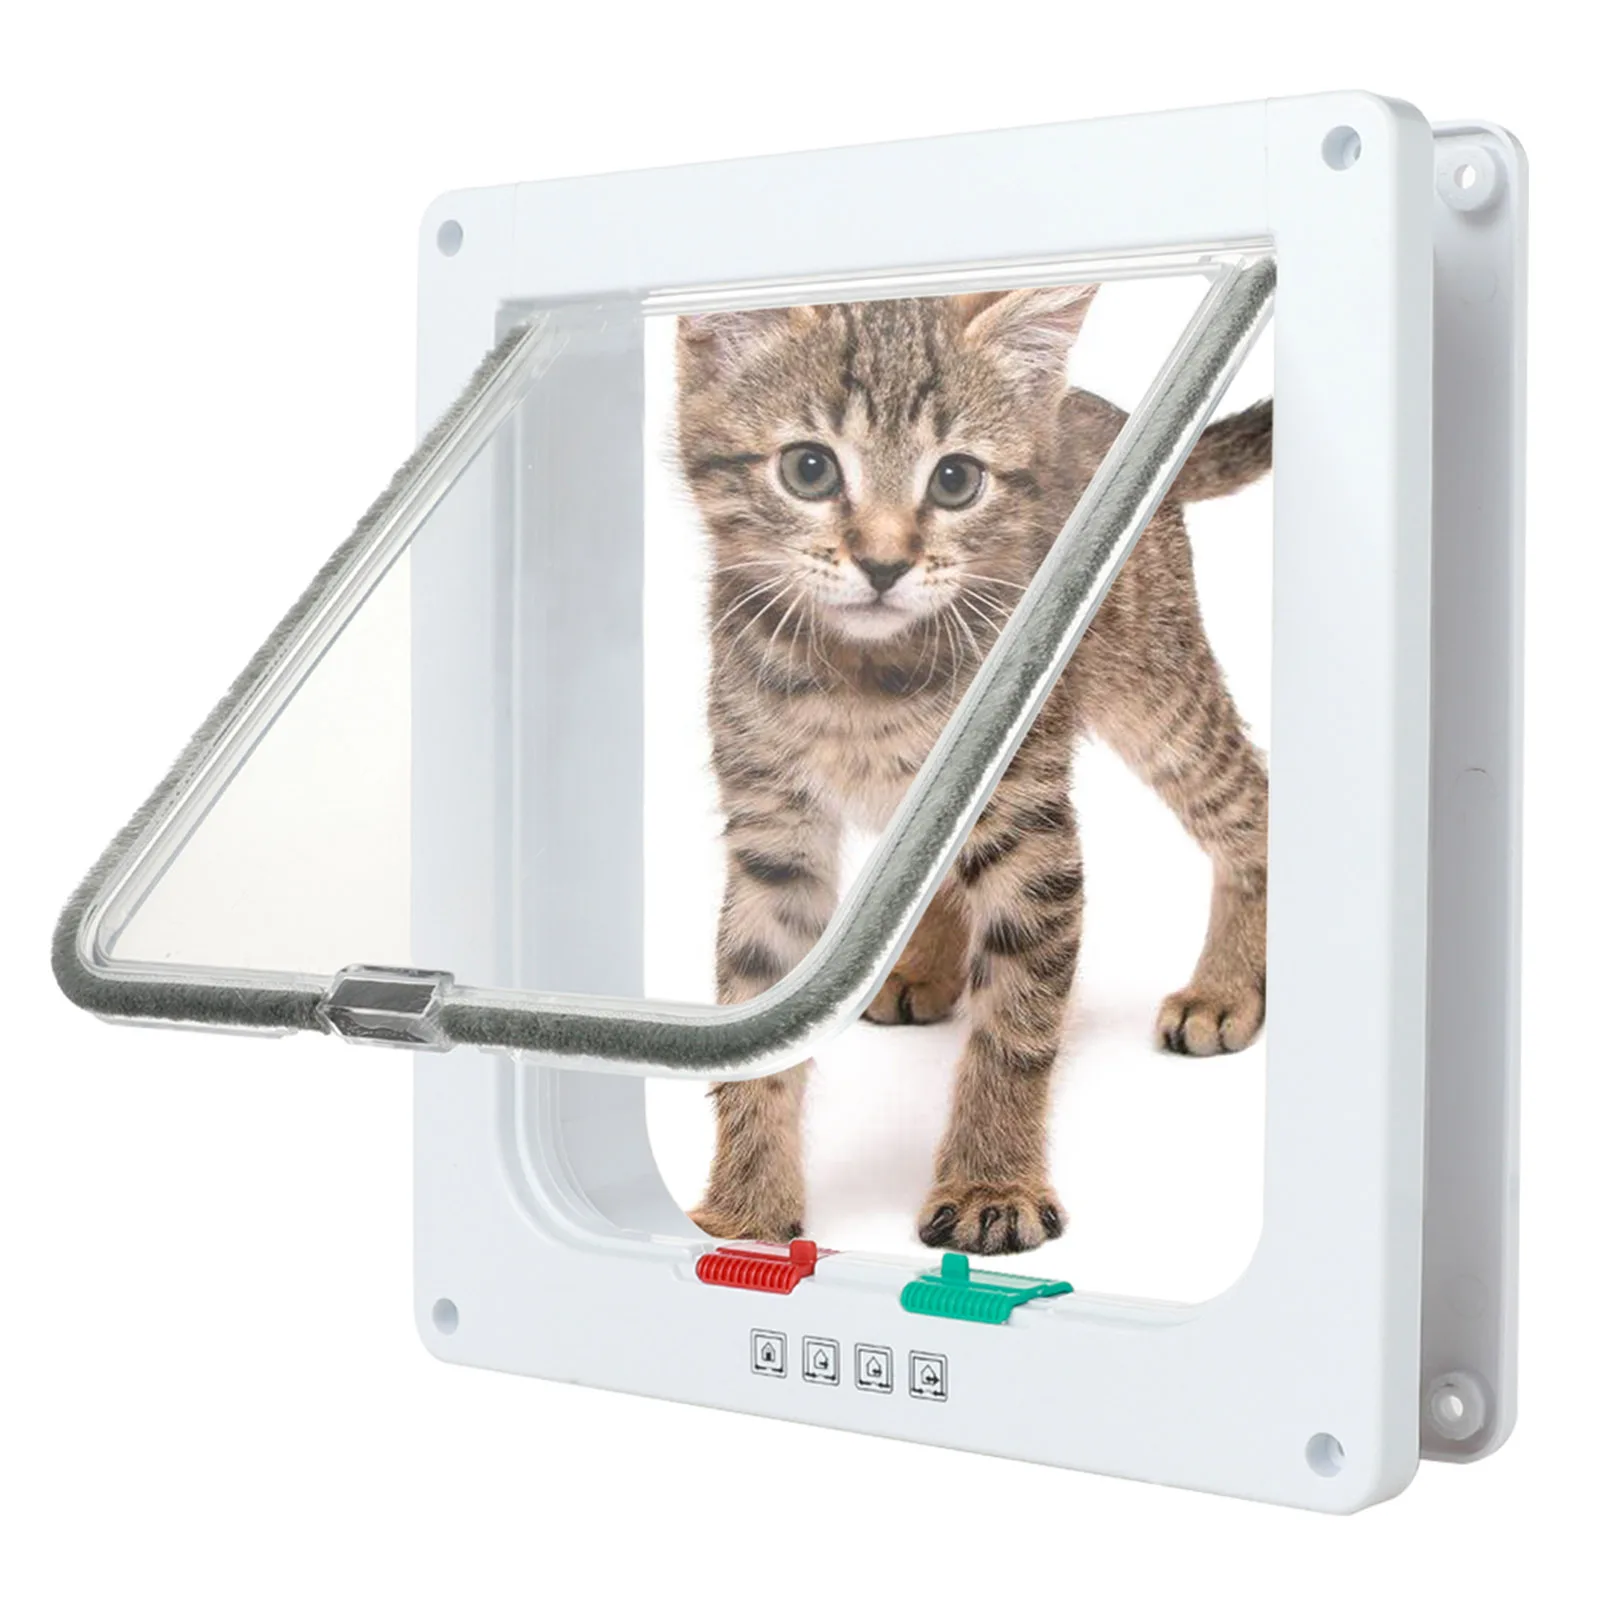 

Dog Gate Flap Cat Door For Cat Door Locks With 4 Way Security Lock Small Pet Window Wall Entrance Pets Supplies Вольеры и клетки